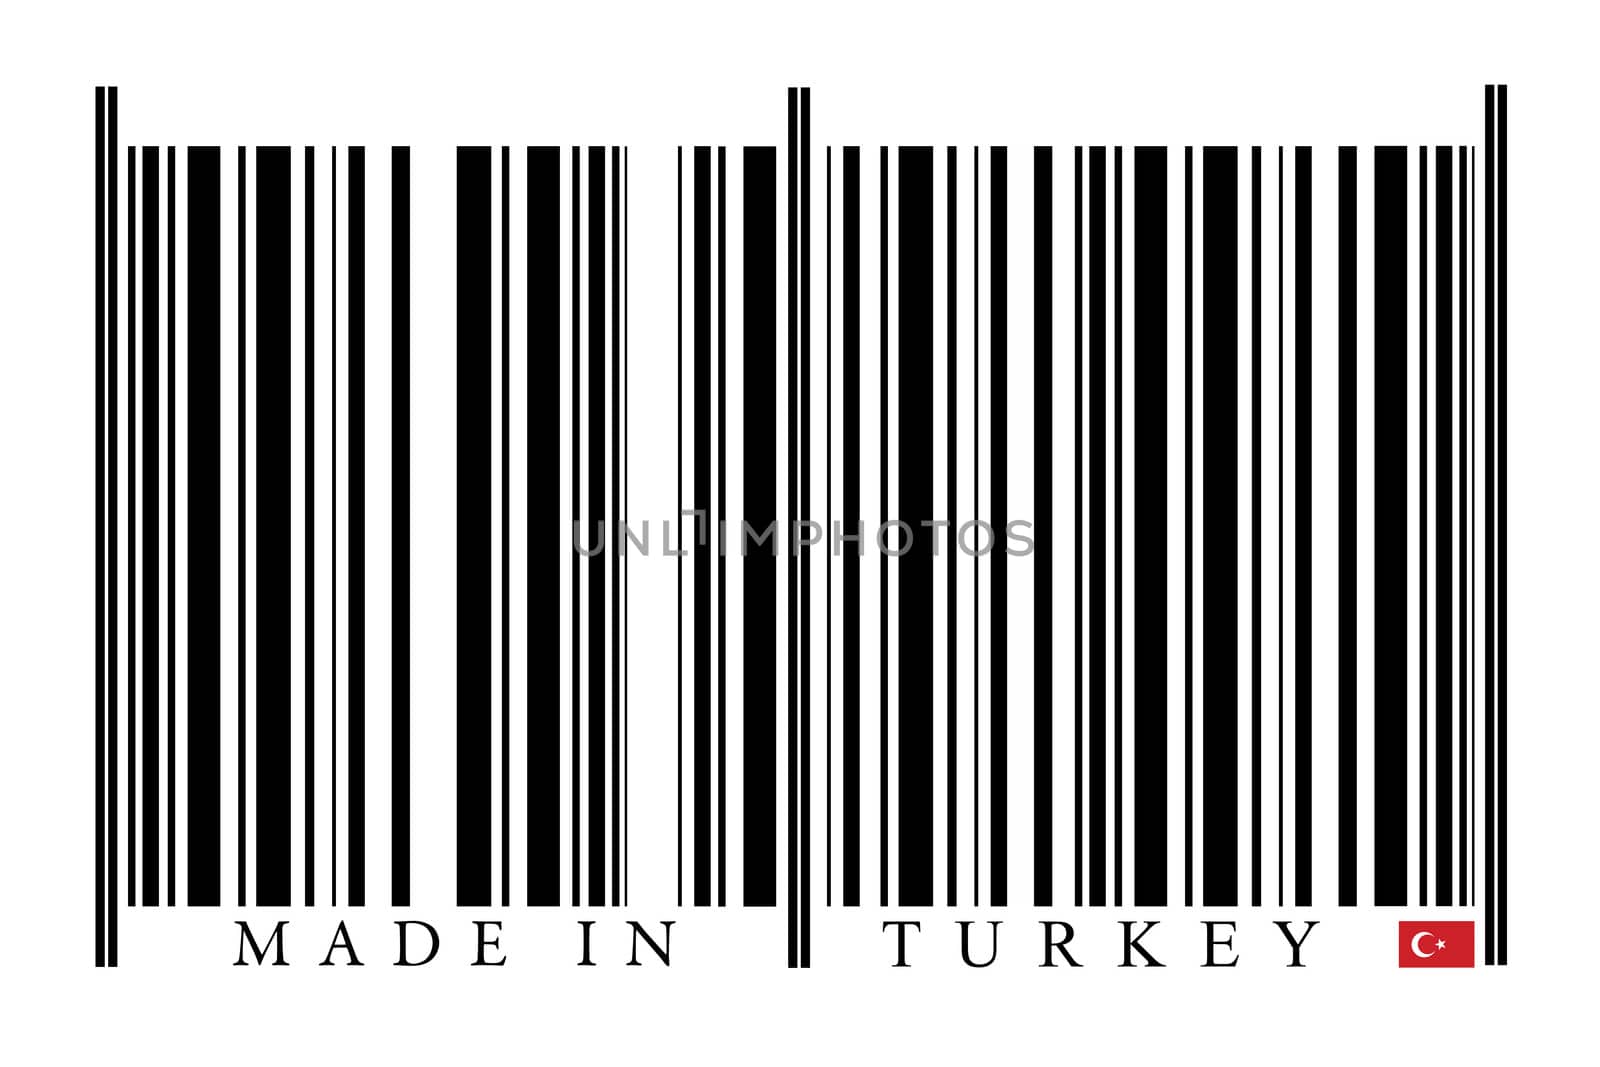 Turkey Barcode by gemenacom